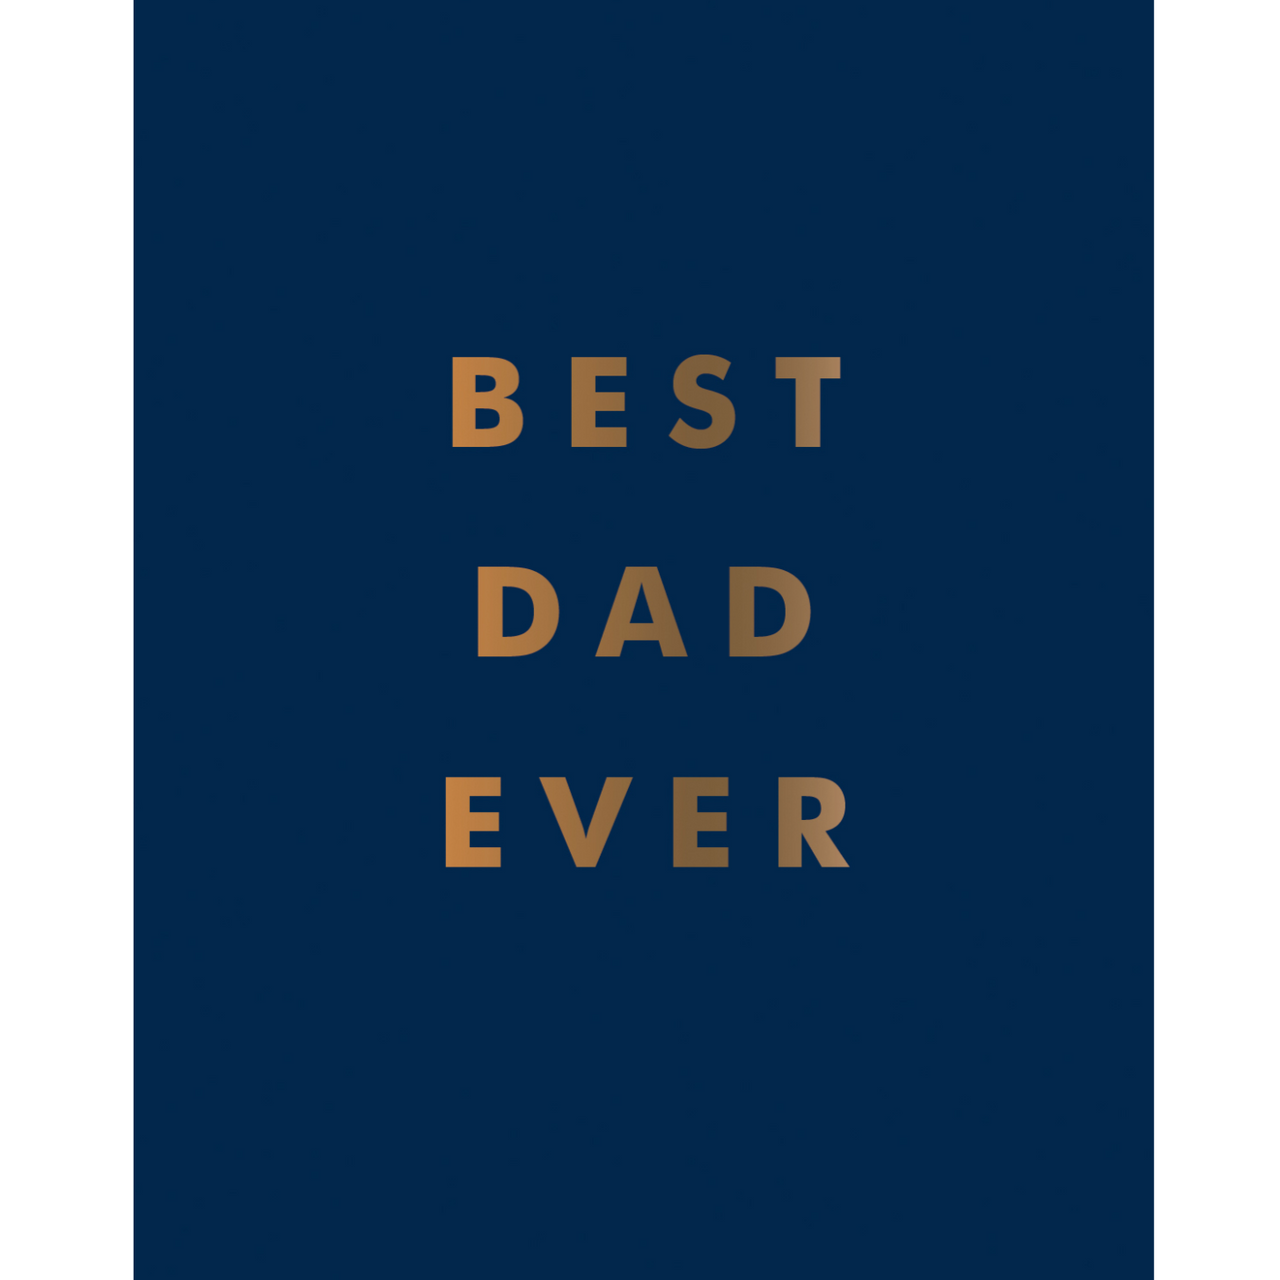 Drake General Store - Best Dad Ever